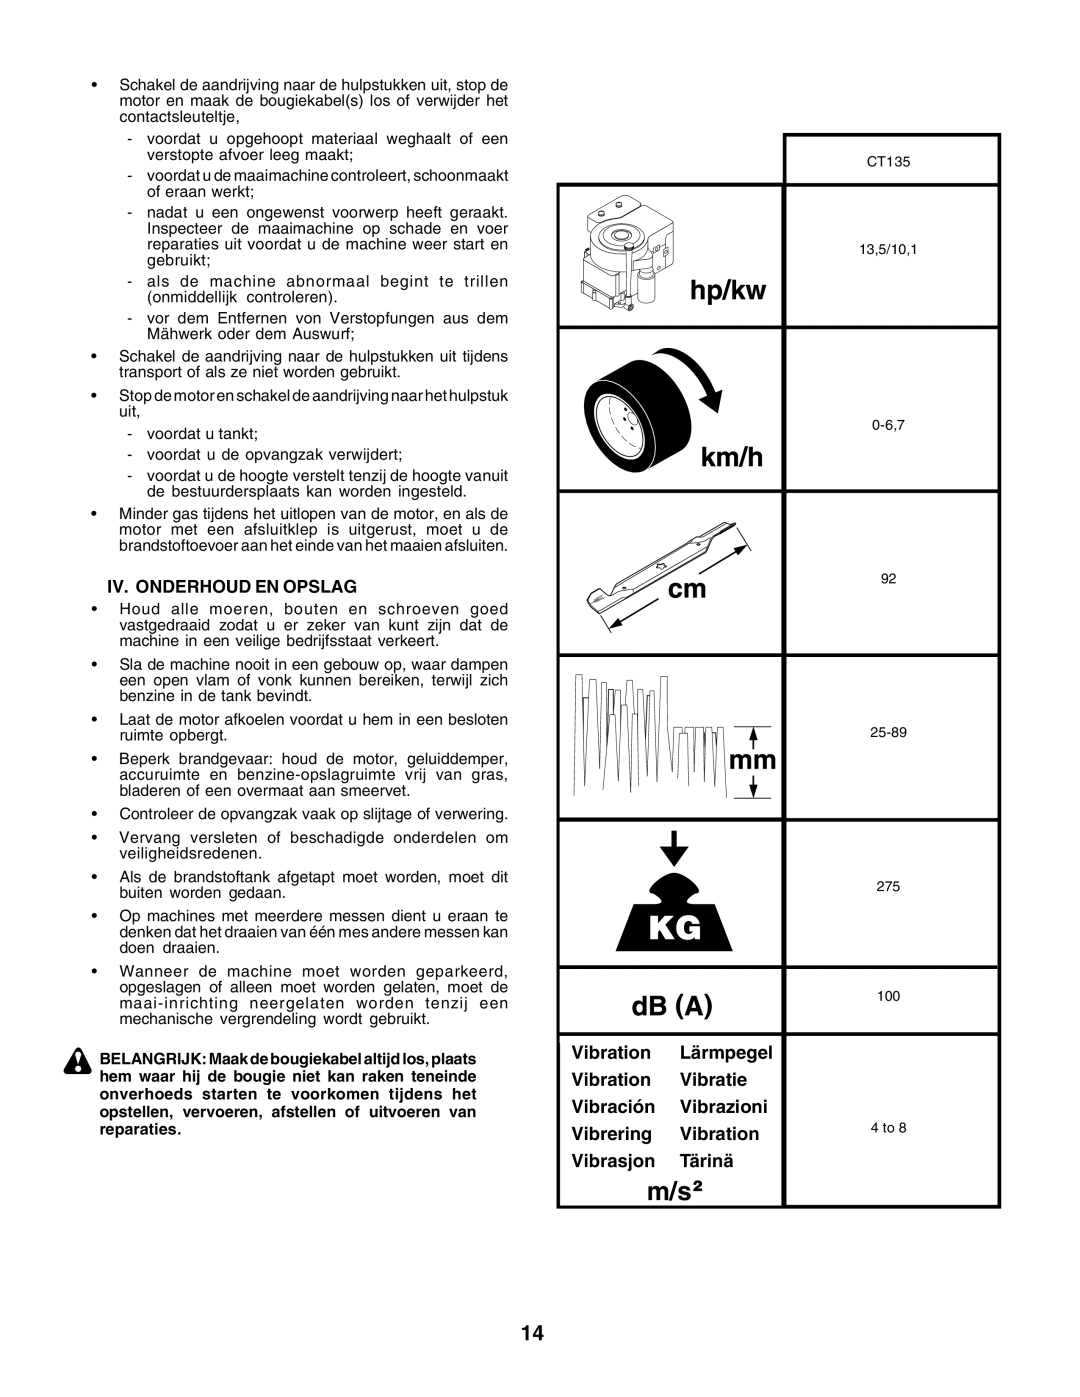 Husqvarna CT135 instruction manual Vibration, Lärmpegel, Vibratie, Vibración, Vibrazioni, Vibrering, Vibrasjon, Tärinä 